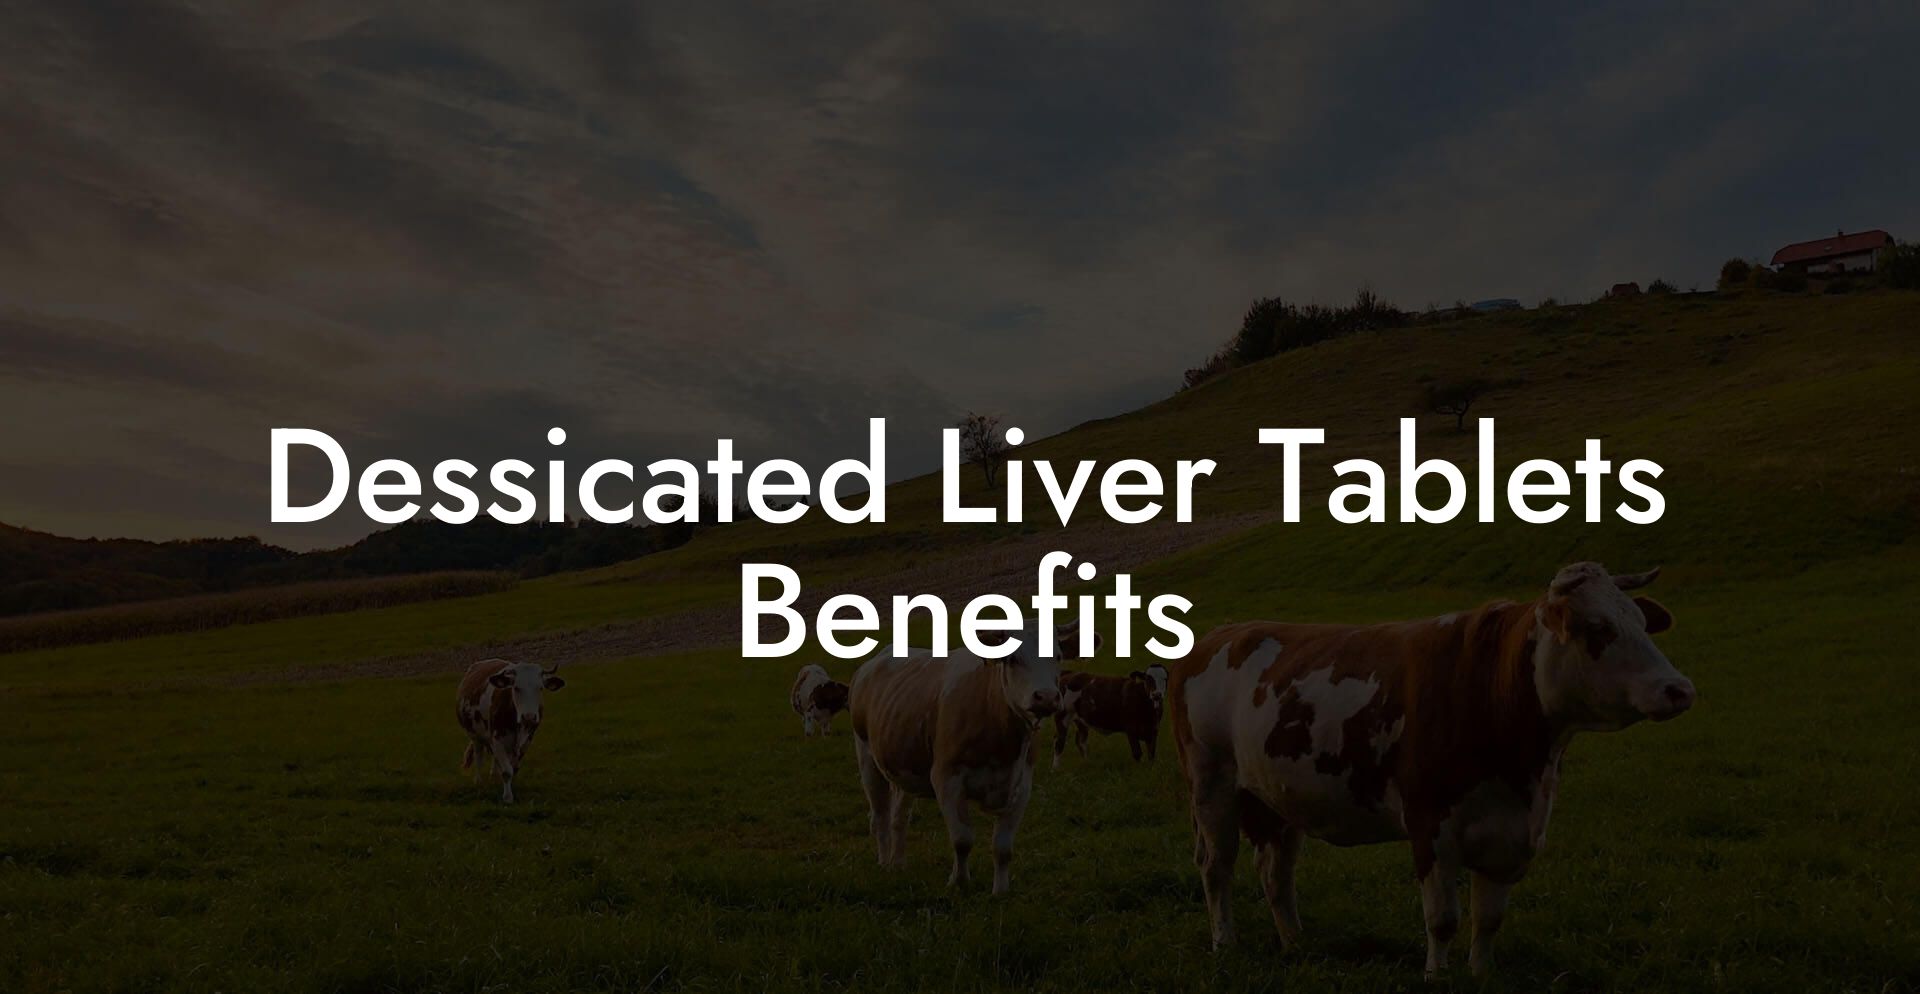 Dessicated Liver Tablets Benefits